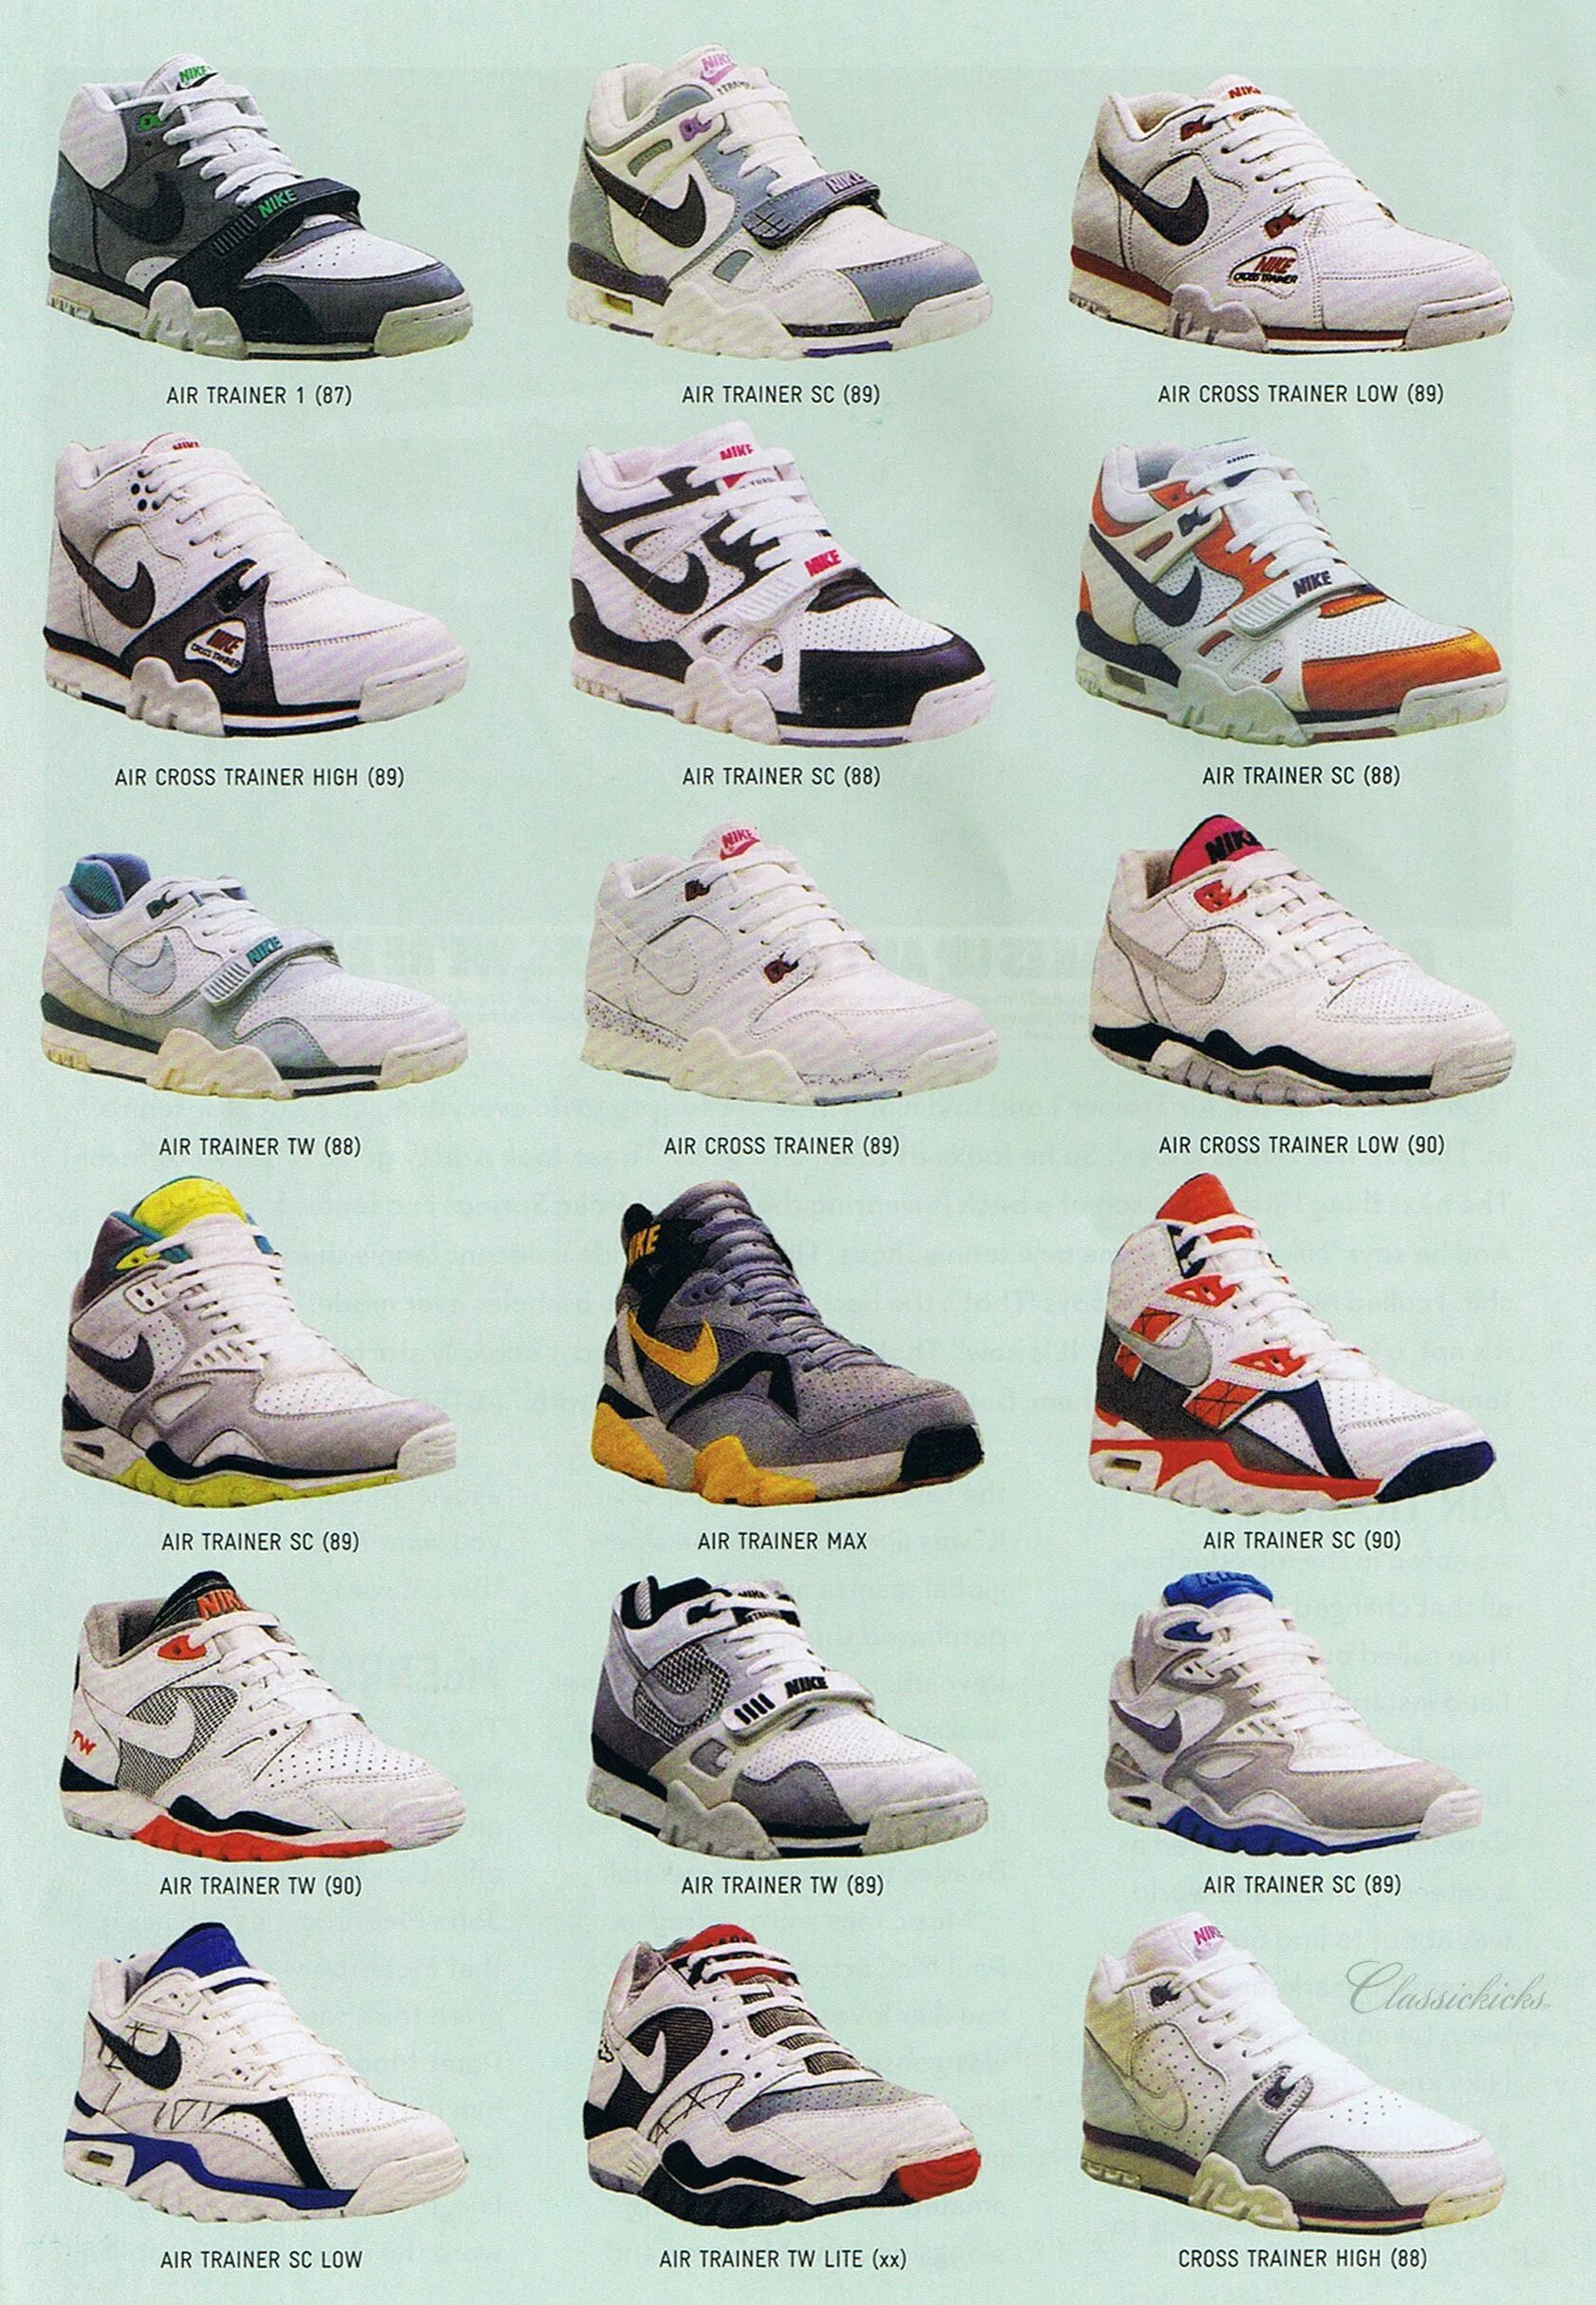 Название модных кроссовок. Retro Trainer breaken кроссовки. Nike Air Trainer. Air Trainer High Shoes 1987.